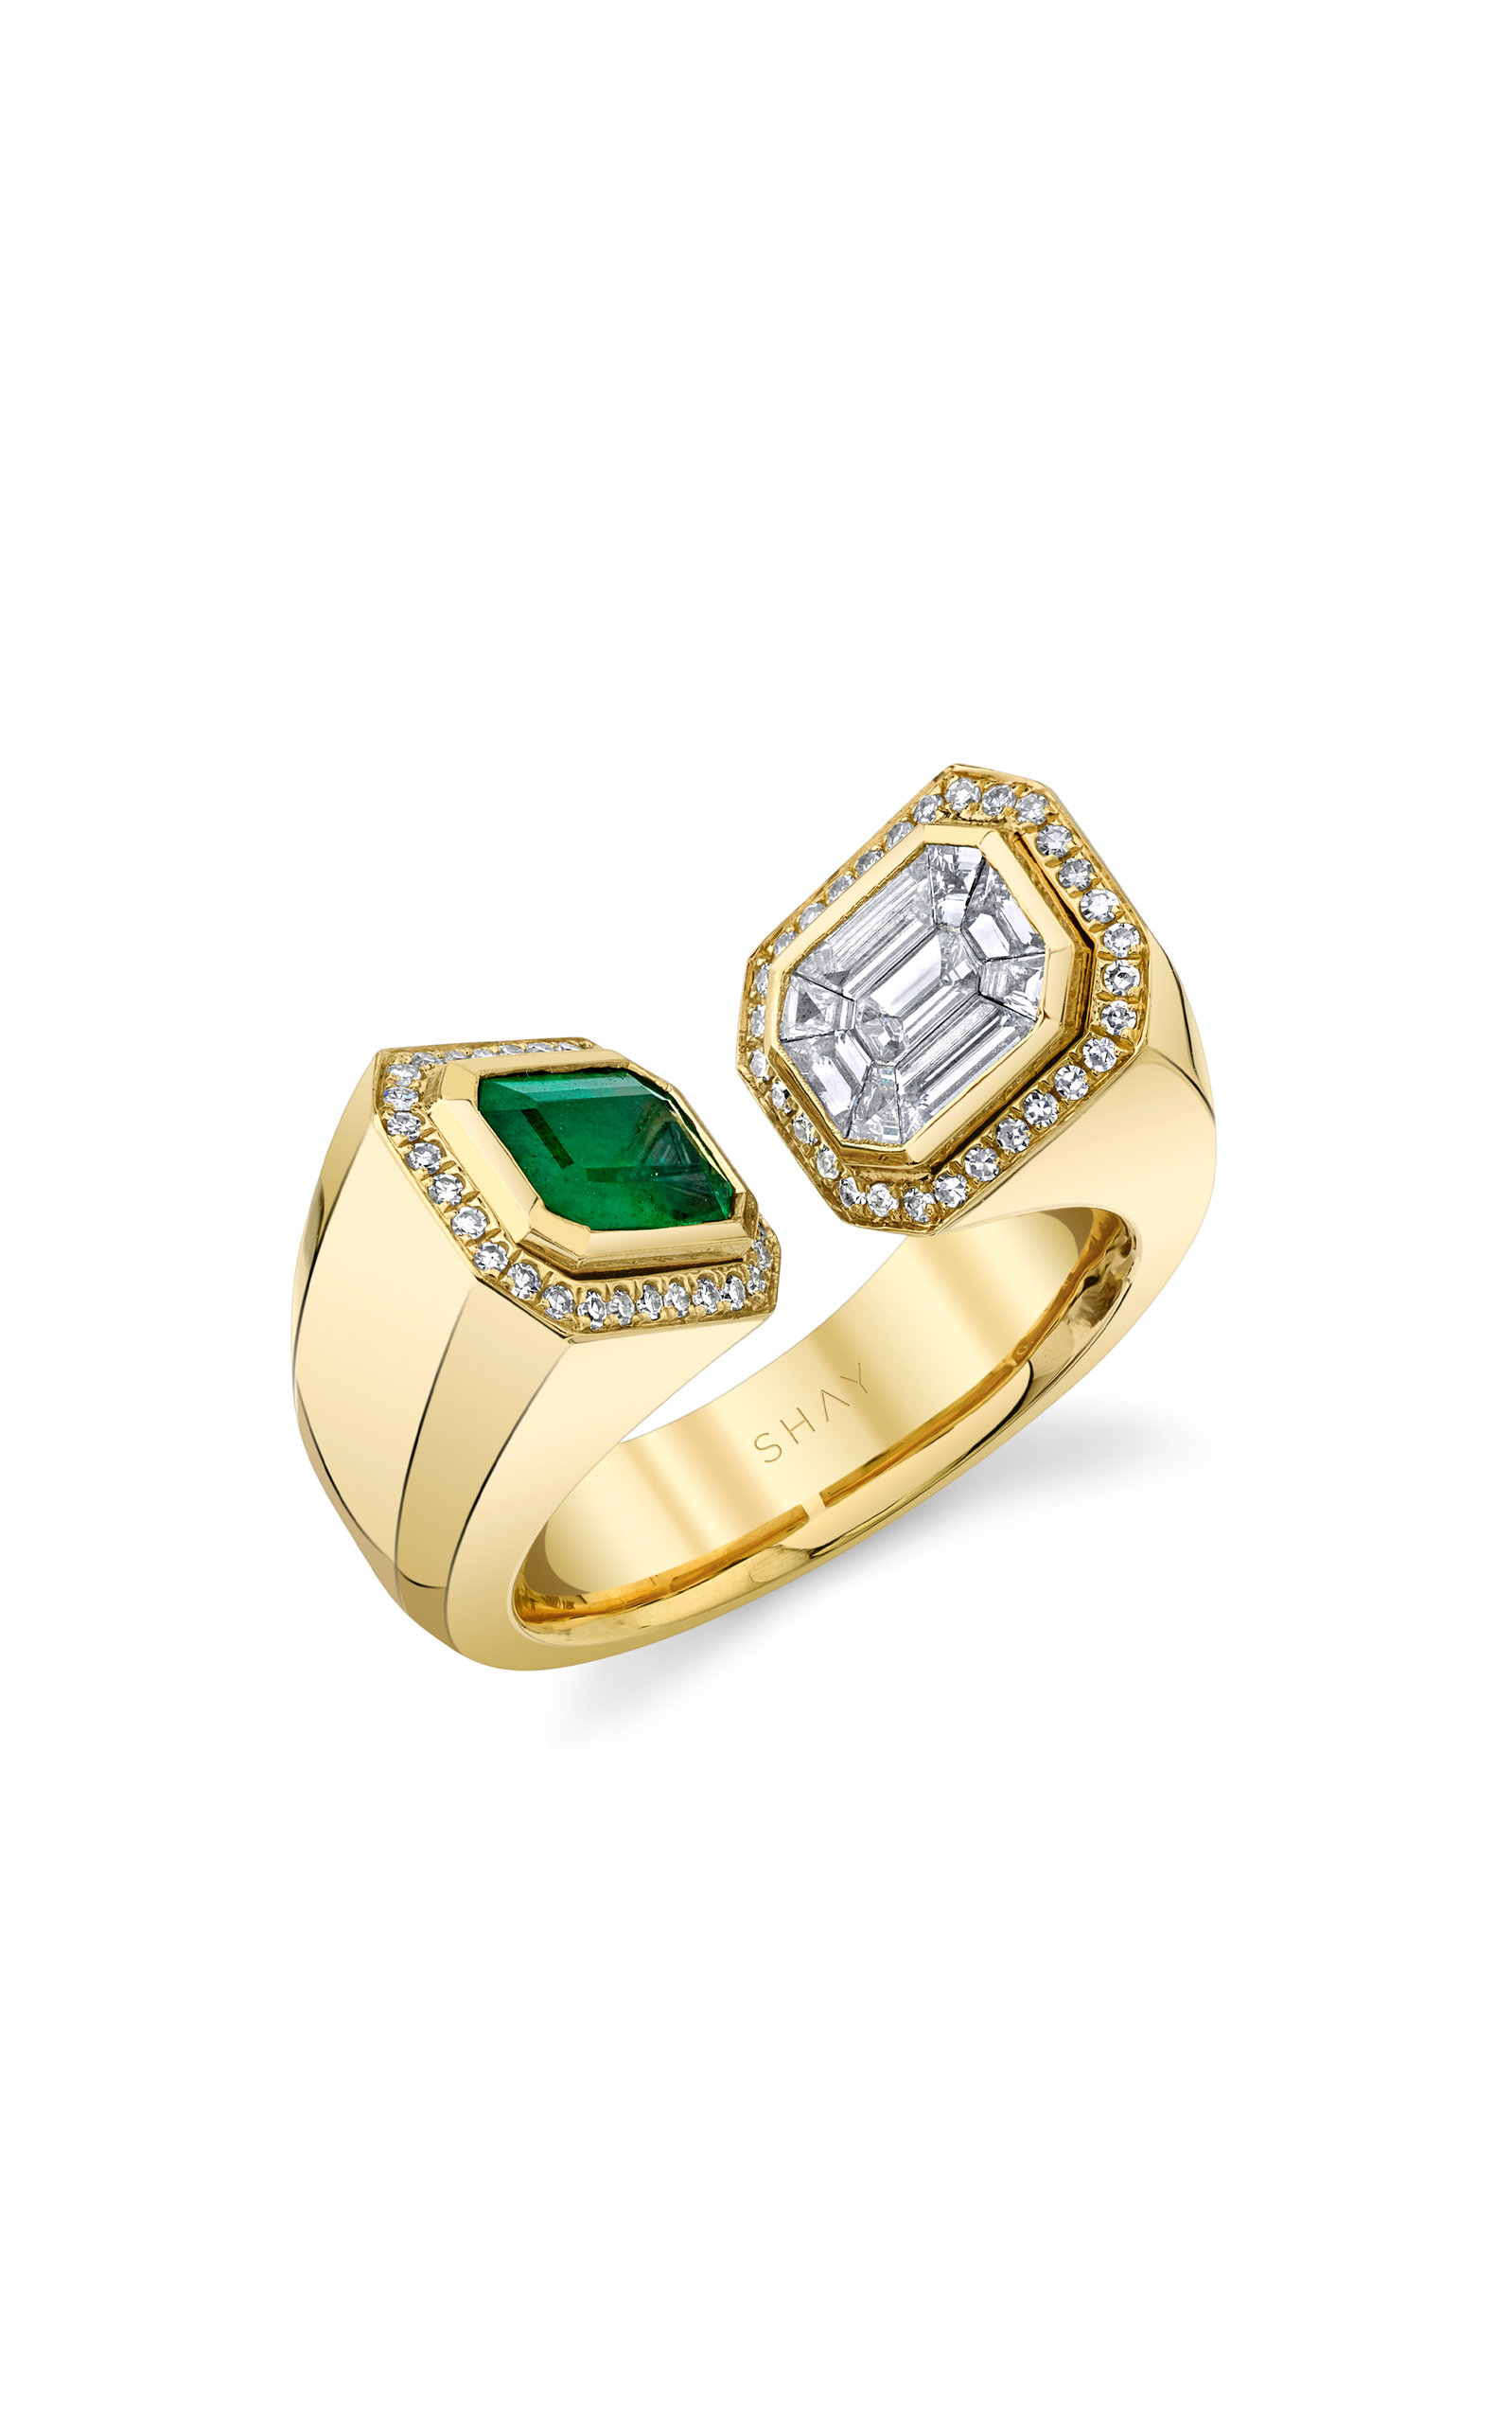 SHAY - Women's Halo Bypass 18K Yellow Gold Diamond; Emerald Ring - Gold - US 5 - Moda Operandi - Gifts For Her